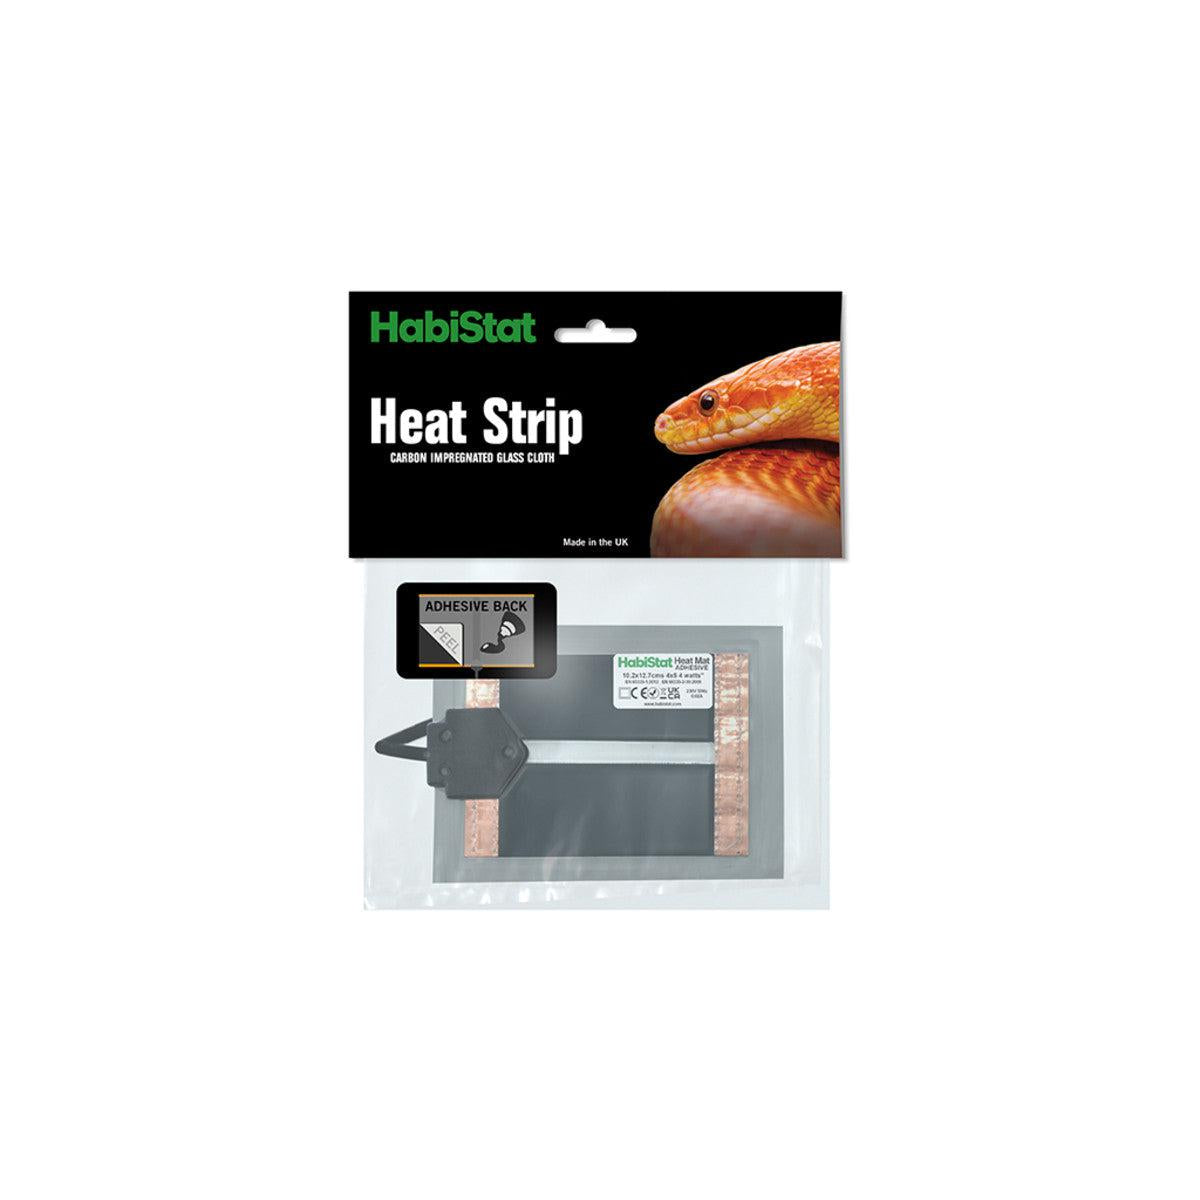 HabiStat Heat Mat Adhesive